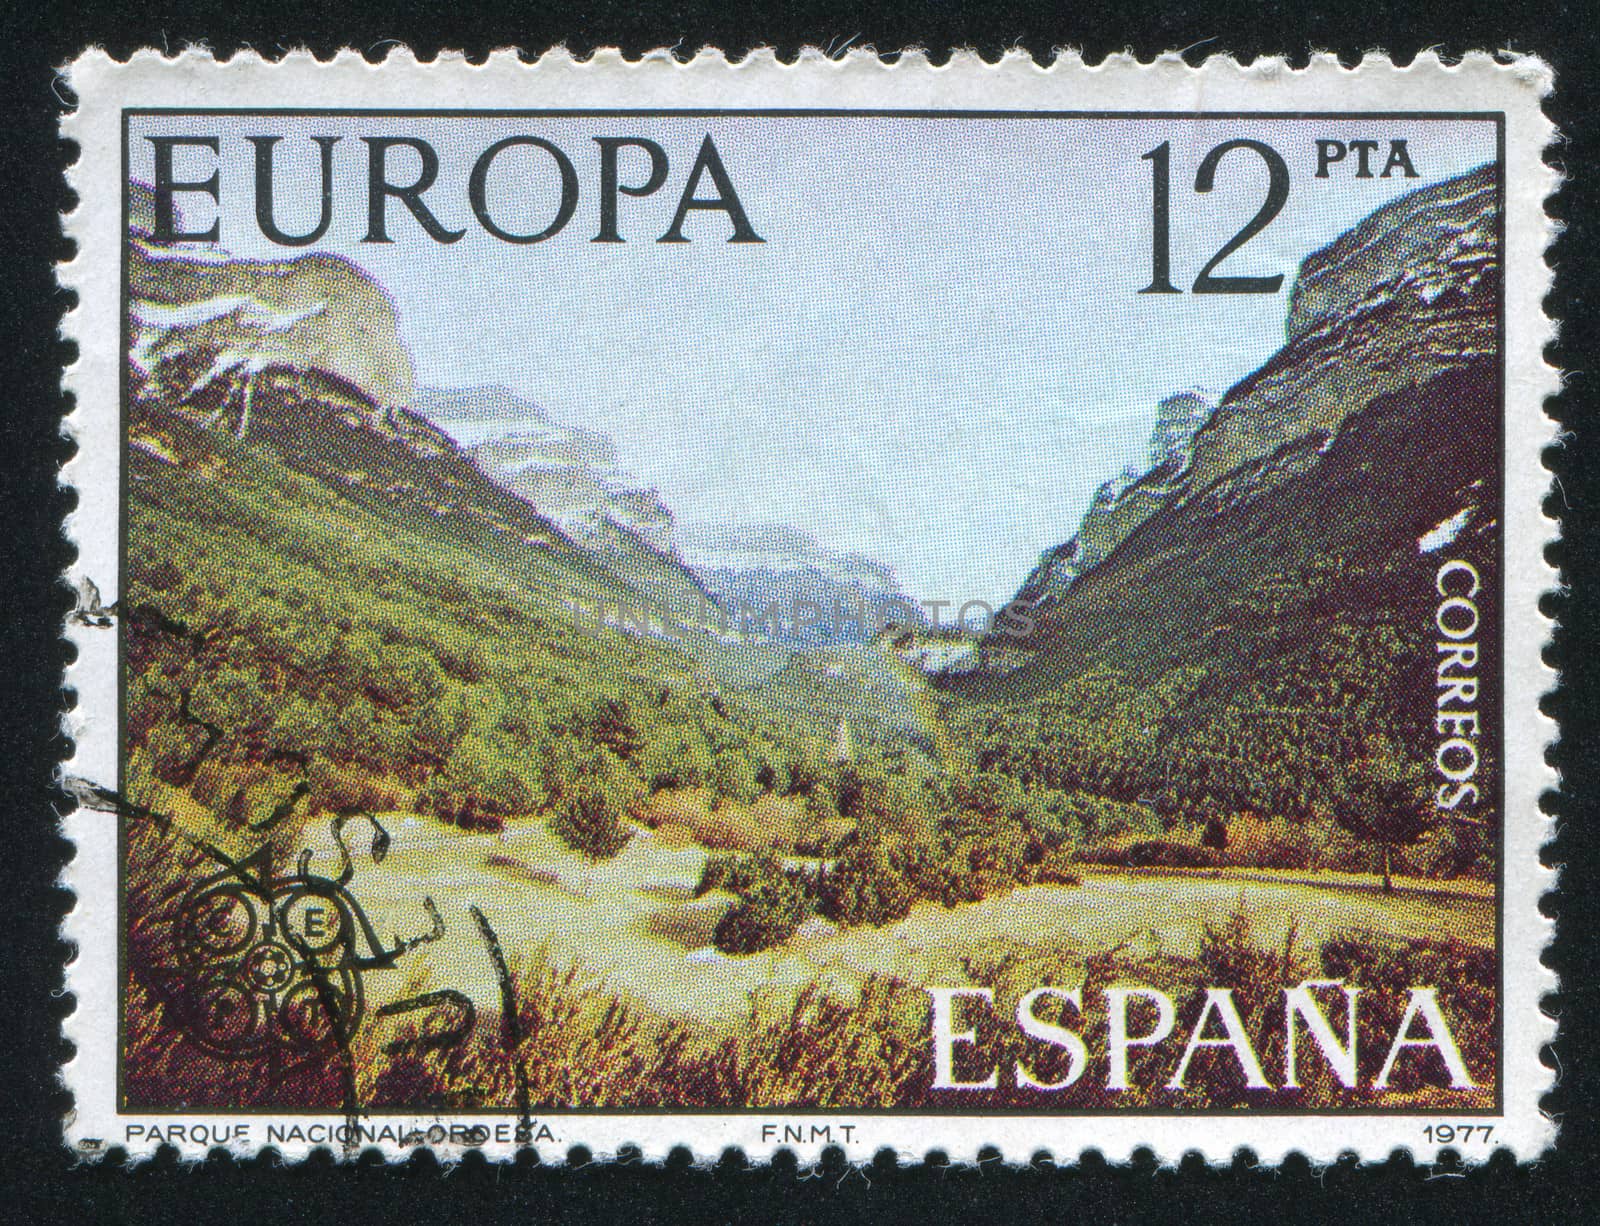 SPAIN - CIRCA 1977: stamp printed by Spain, shows Ordesa National Park, Europa, circa 1977